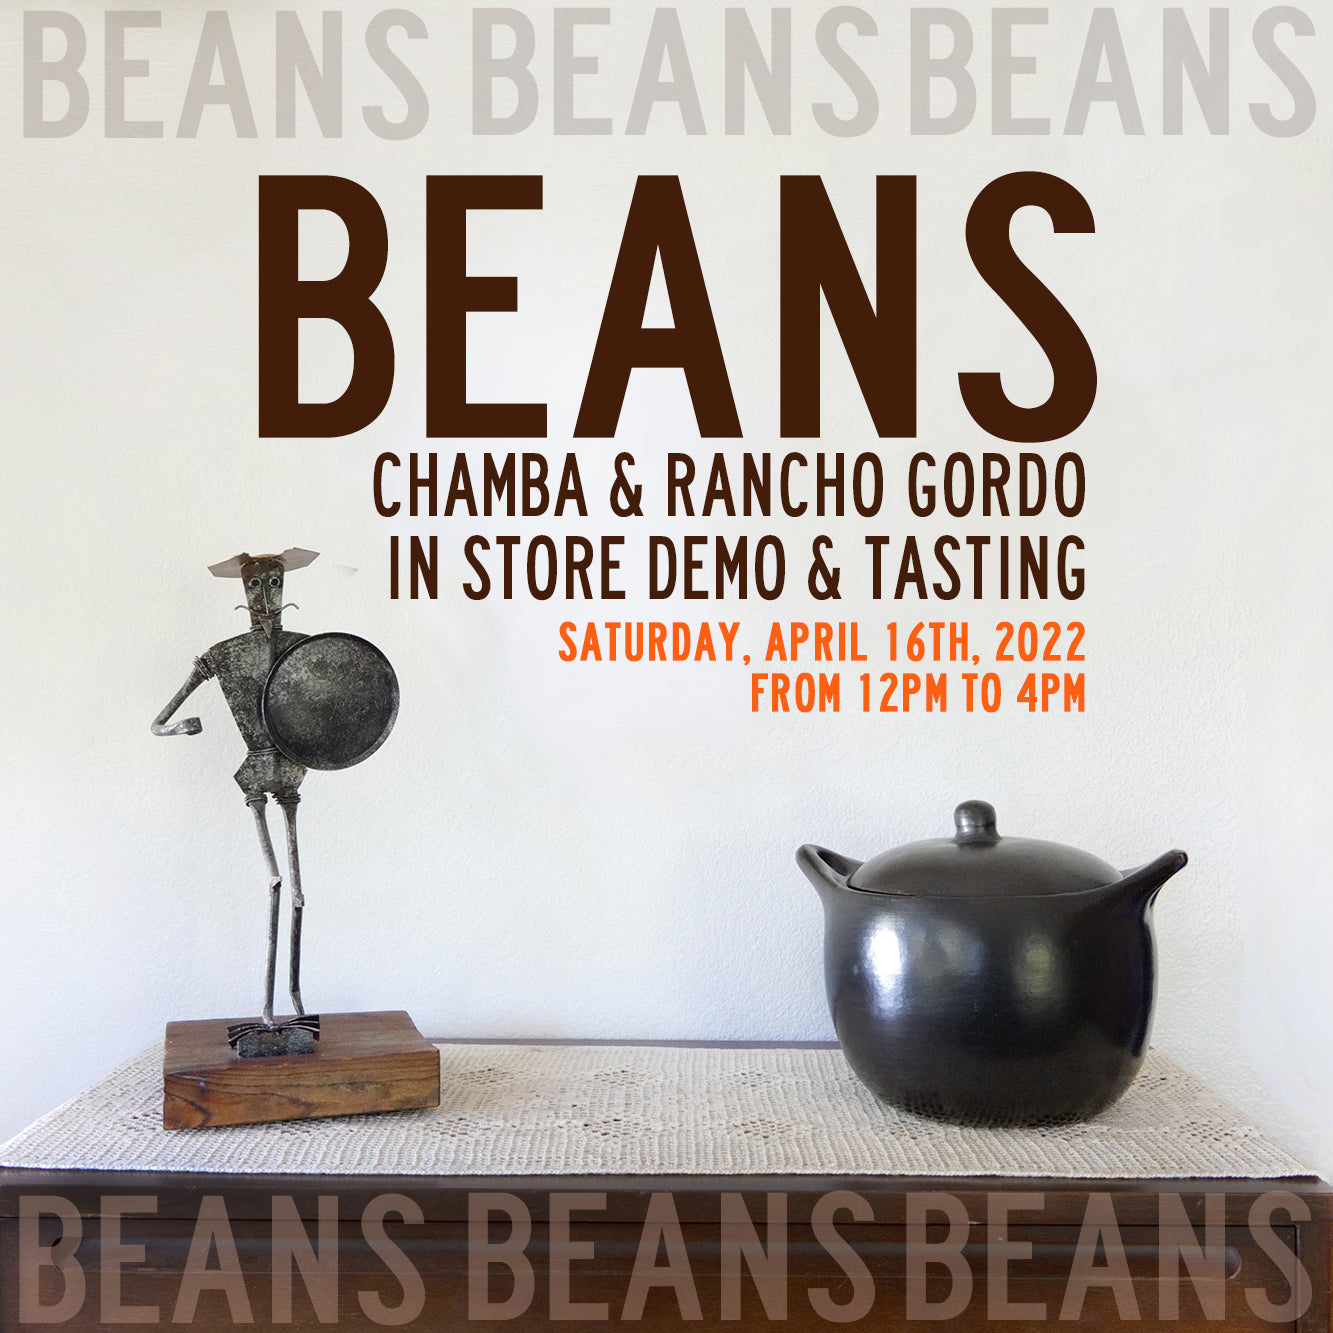 Chamba & Rancho Gordo Beans!